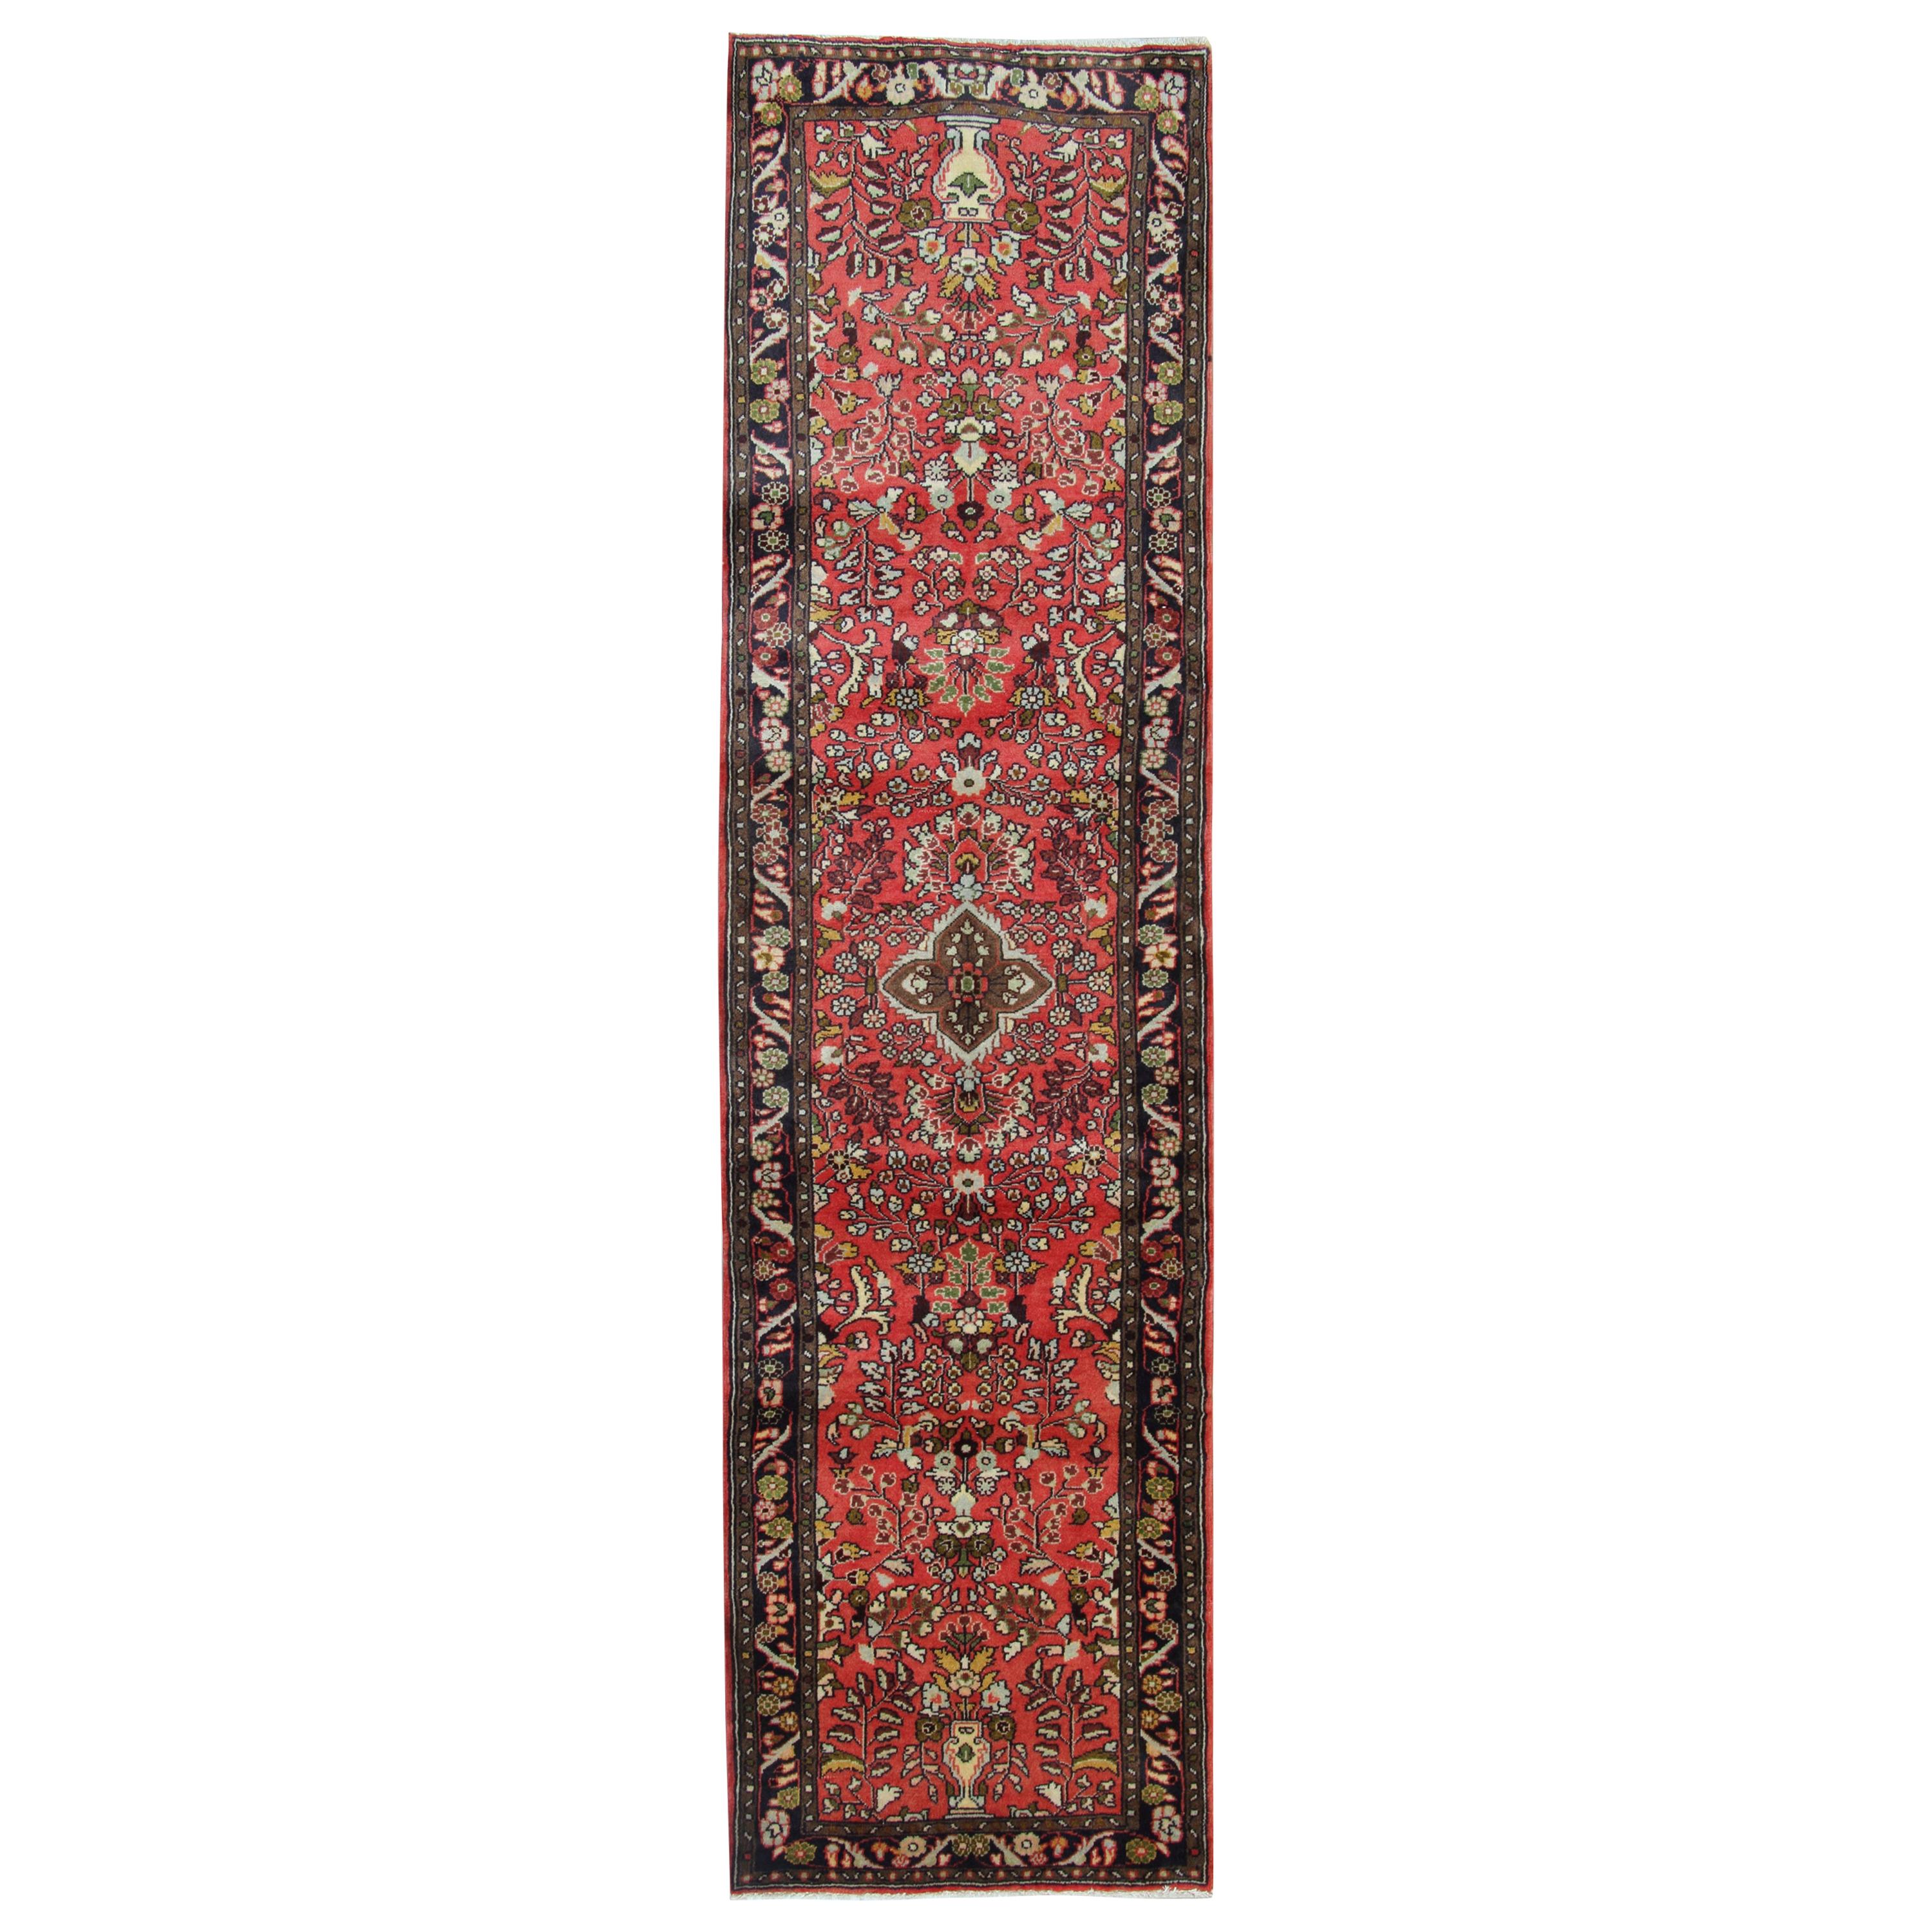 Handwoven Oriental Wool Runner Rug, Traditional Red Blue Carpet- 77x265cm